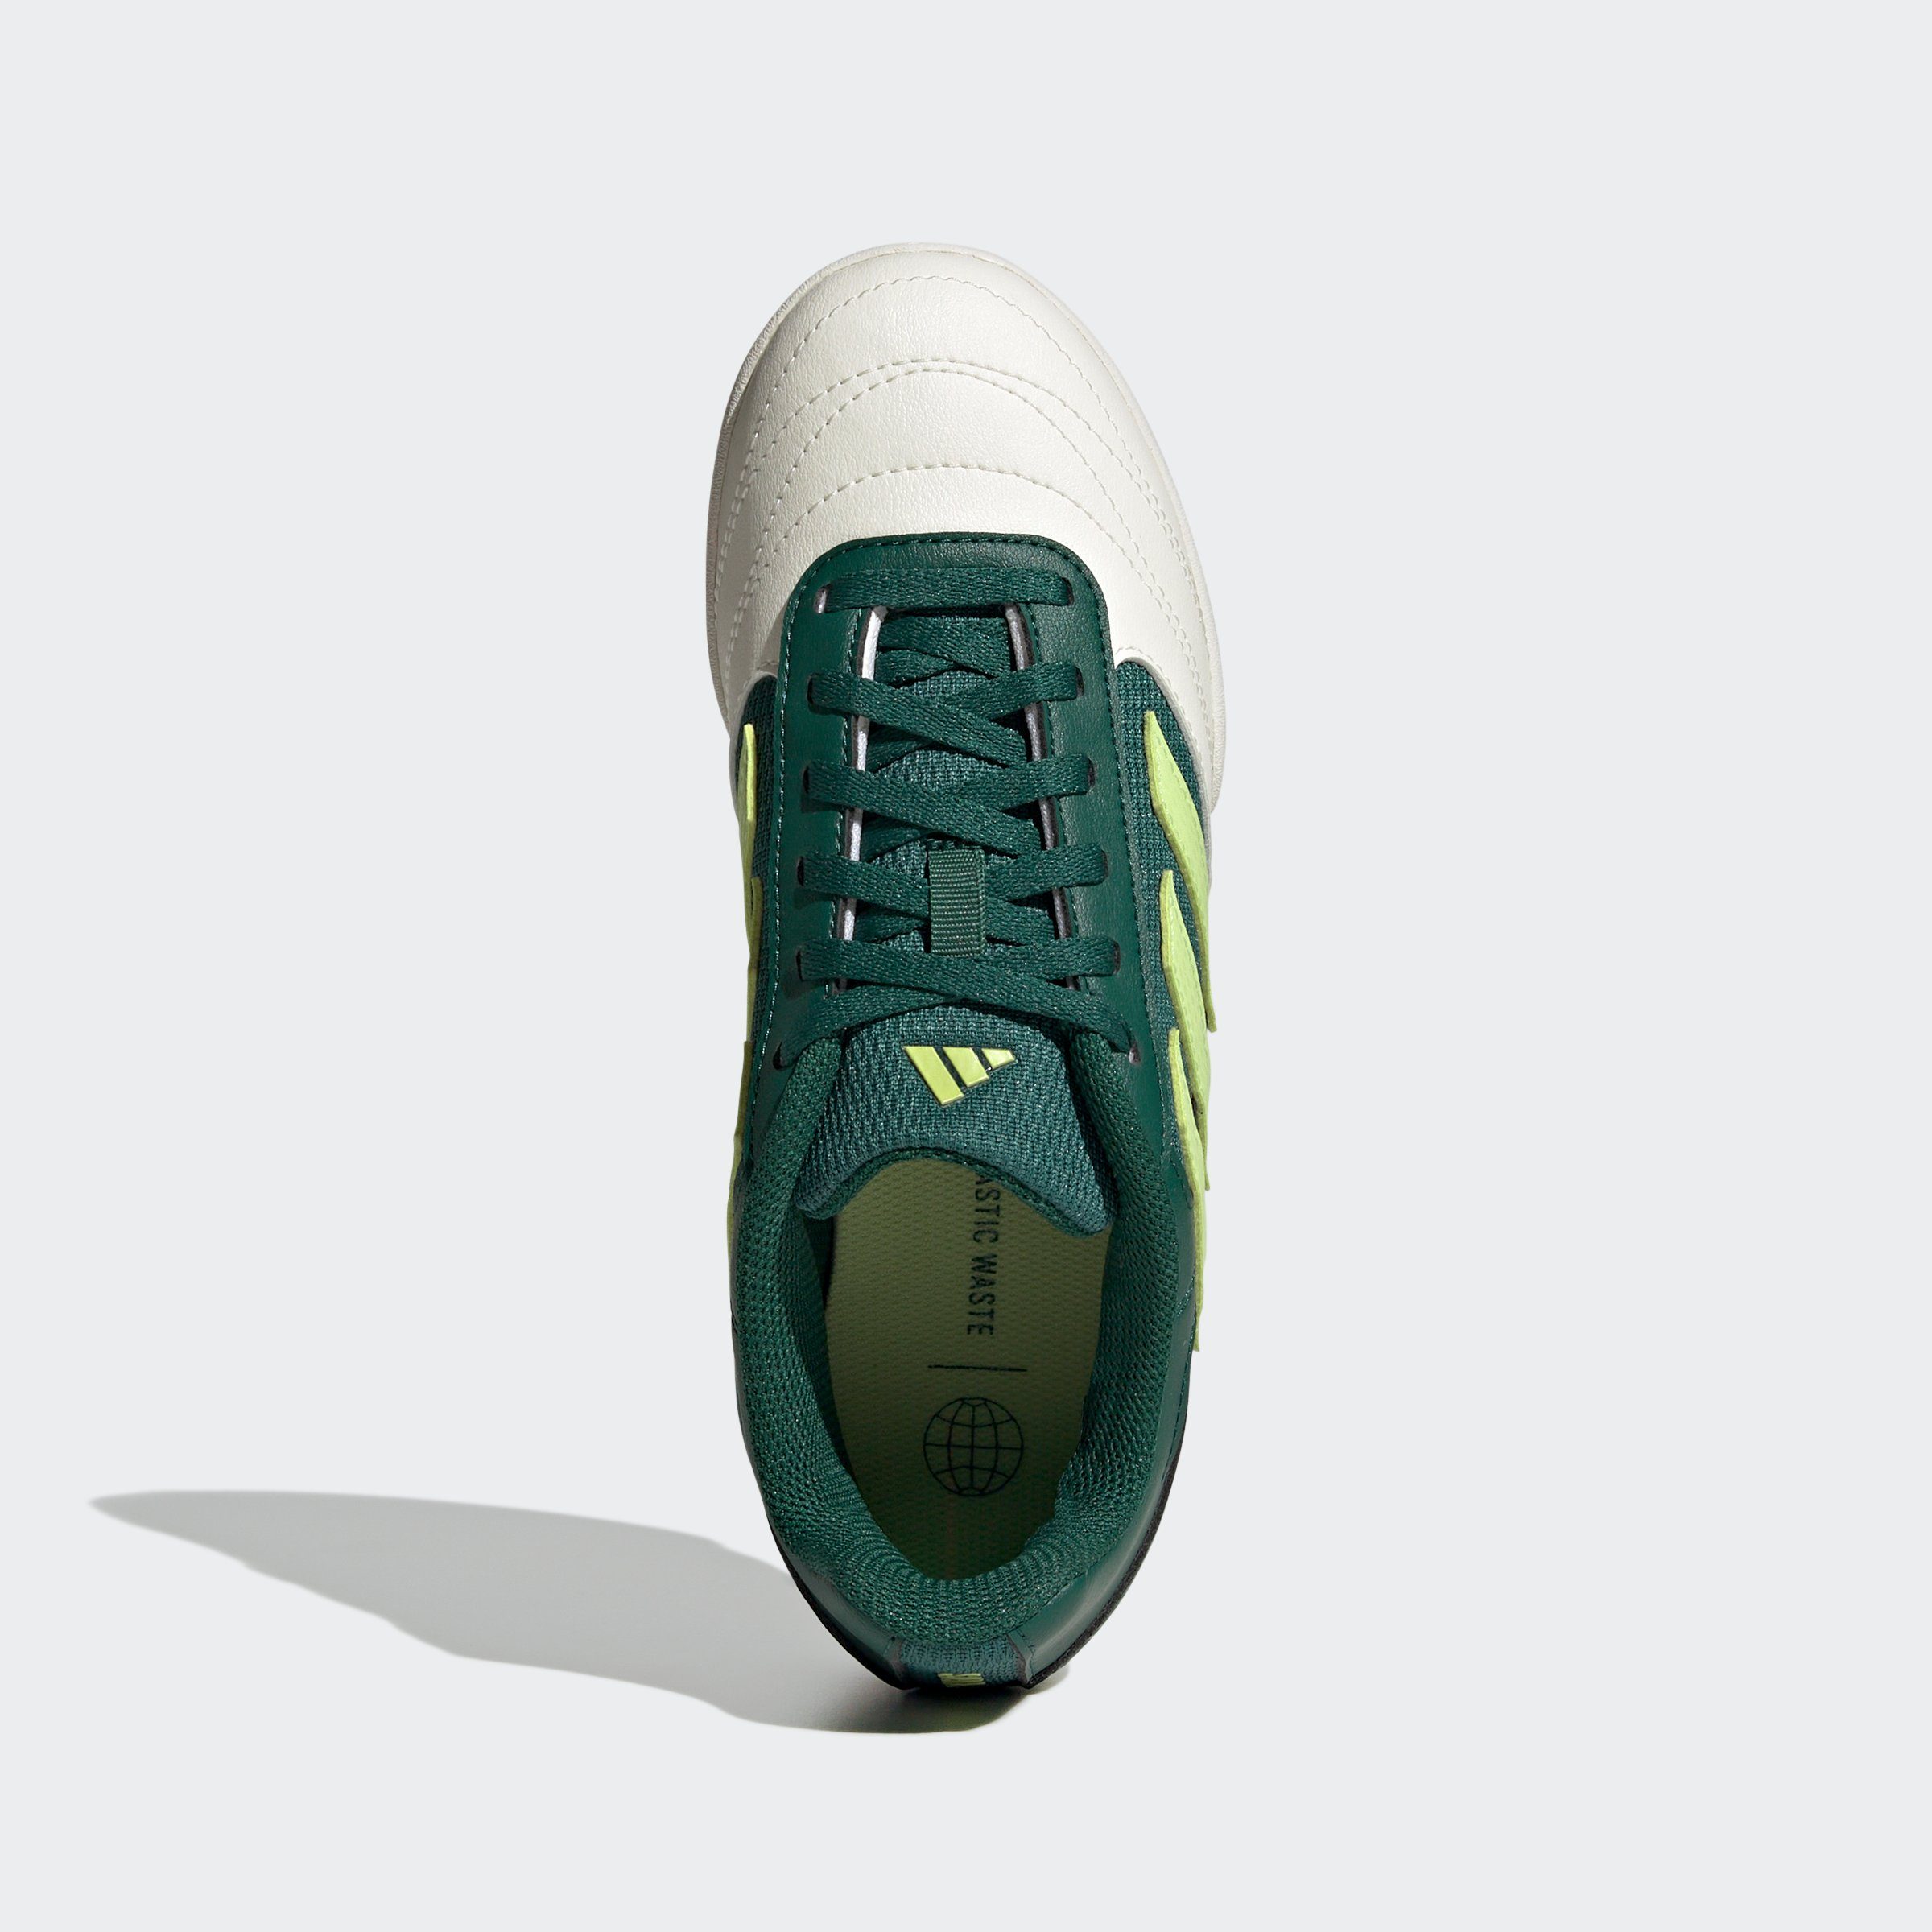 Lime Collegiate adidas 2 / White / Green SUPER Performance Pulse IN Fußballschuh SALA Off